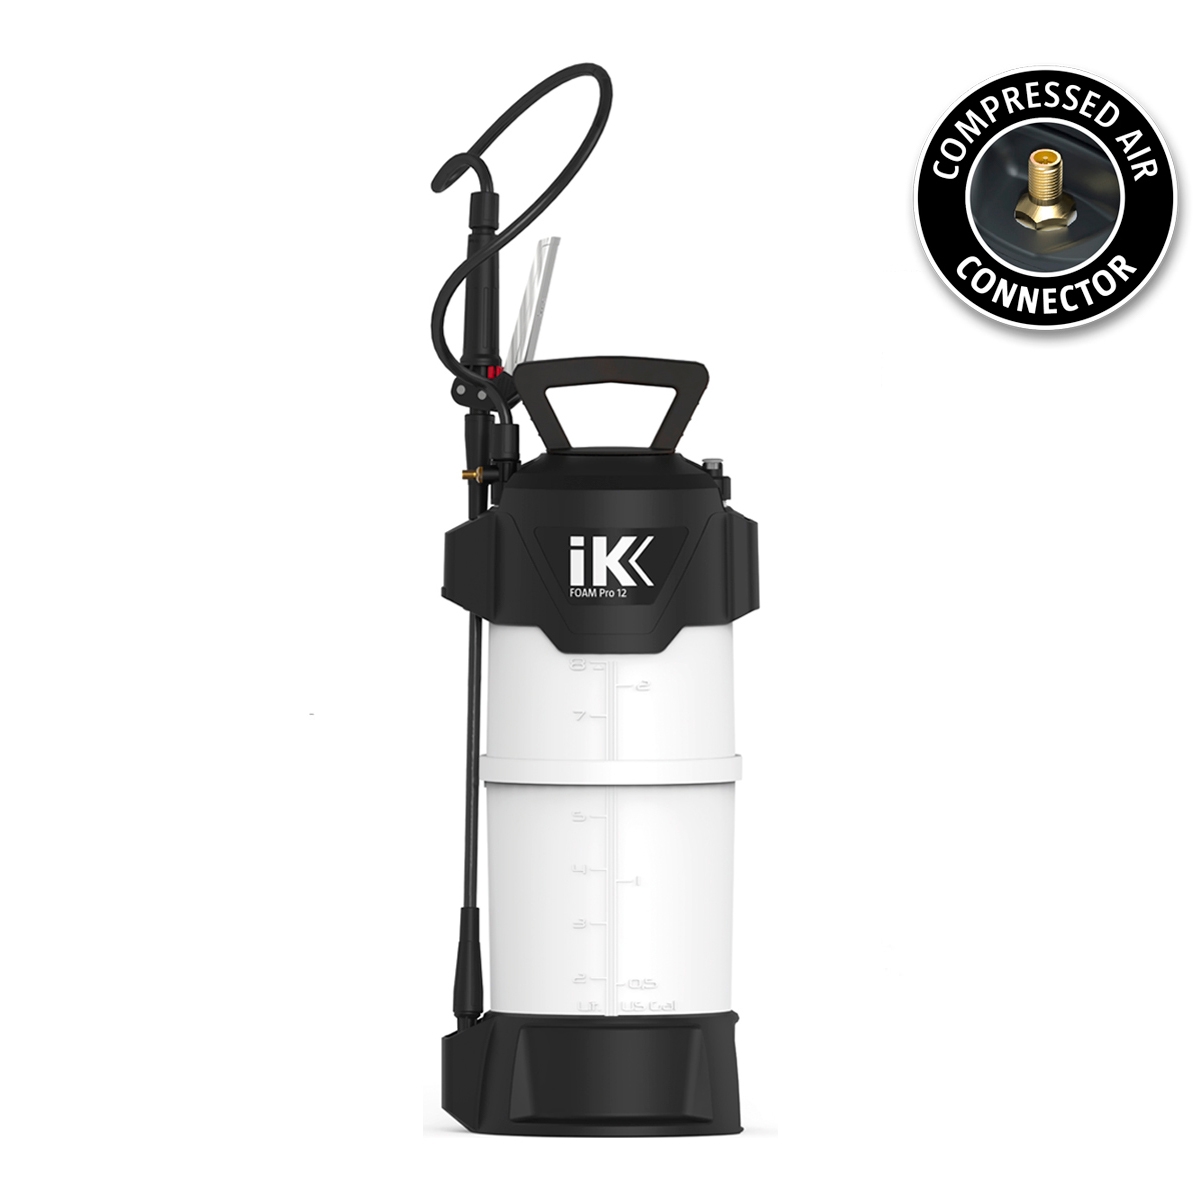 IK Foam Pro 12 Professional Sprayer - 2 gal. 